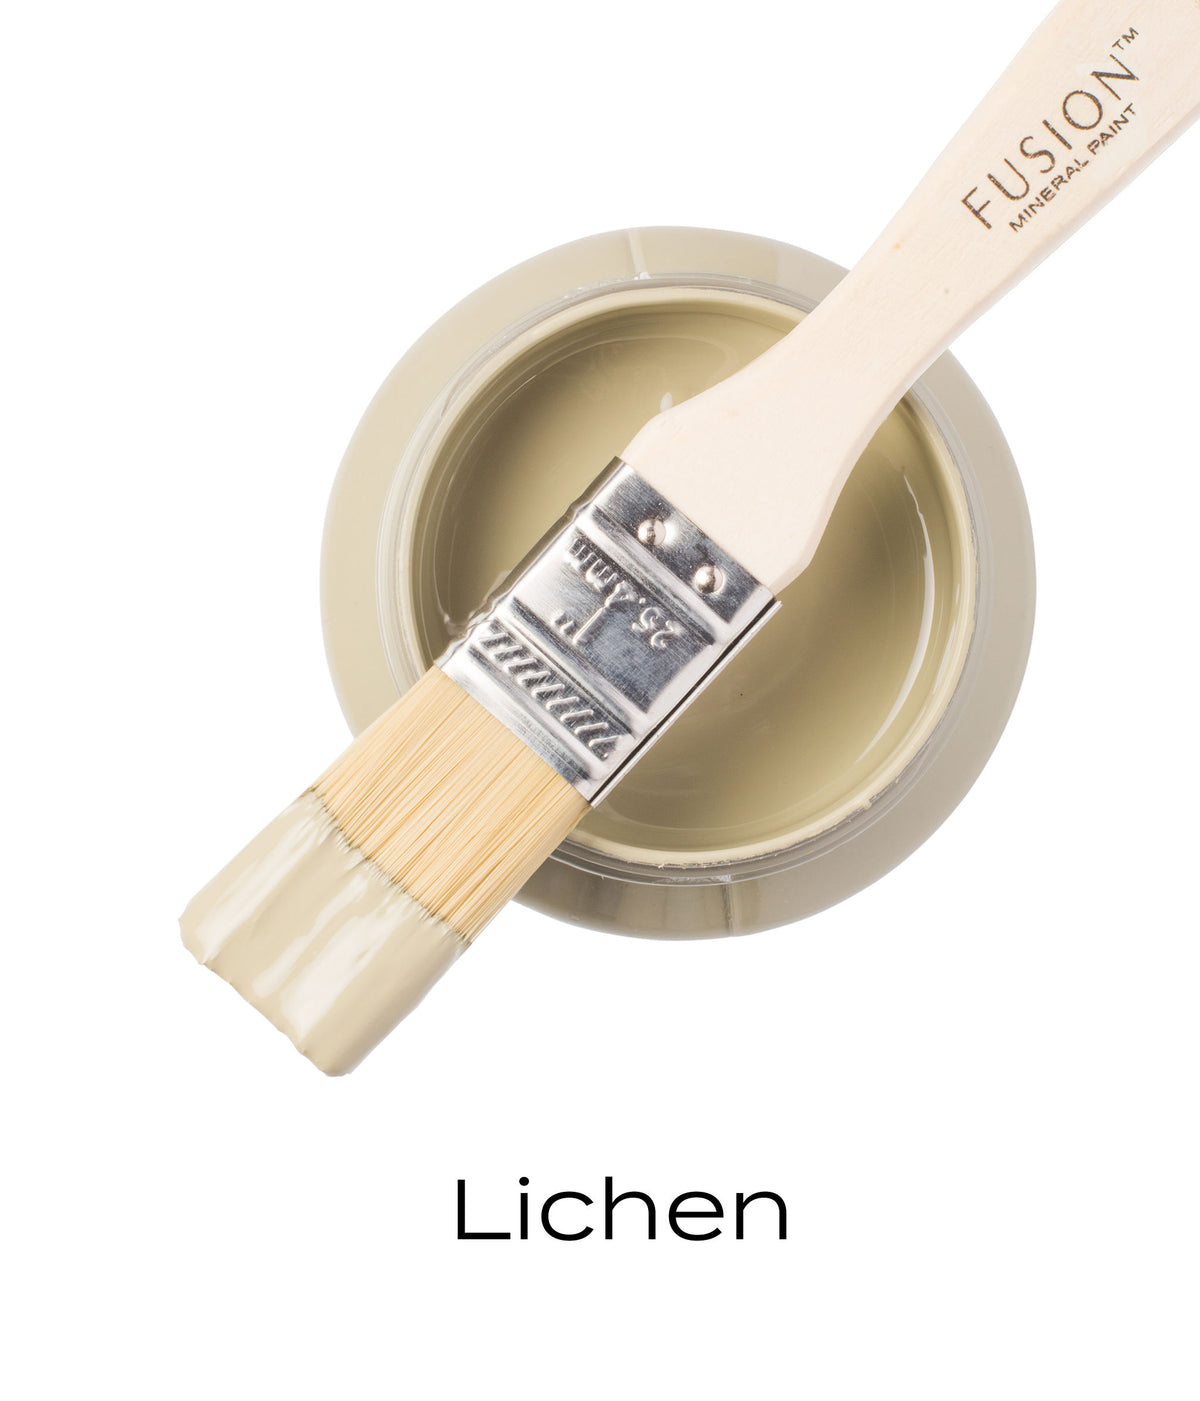 Lichen-Fusion Mineral Paint